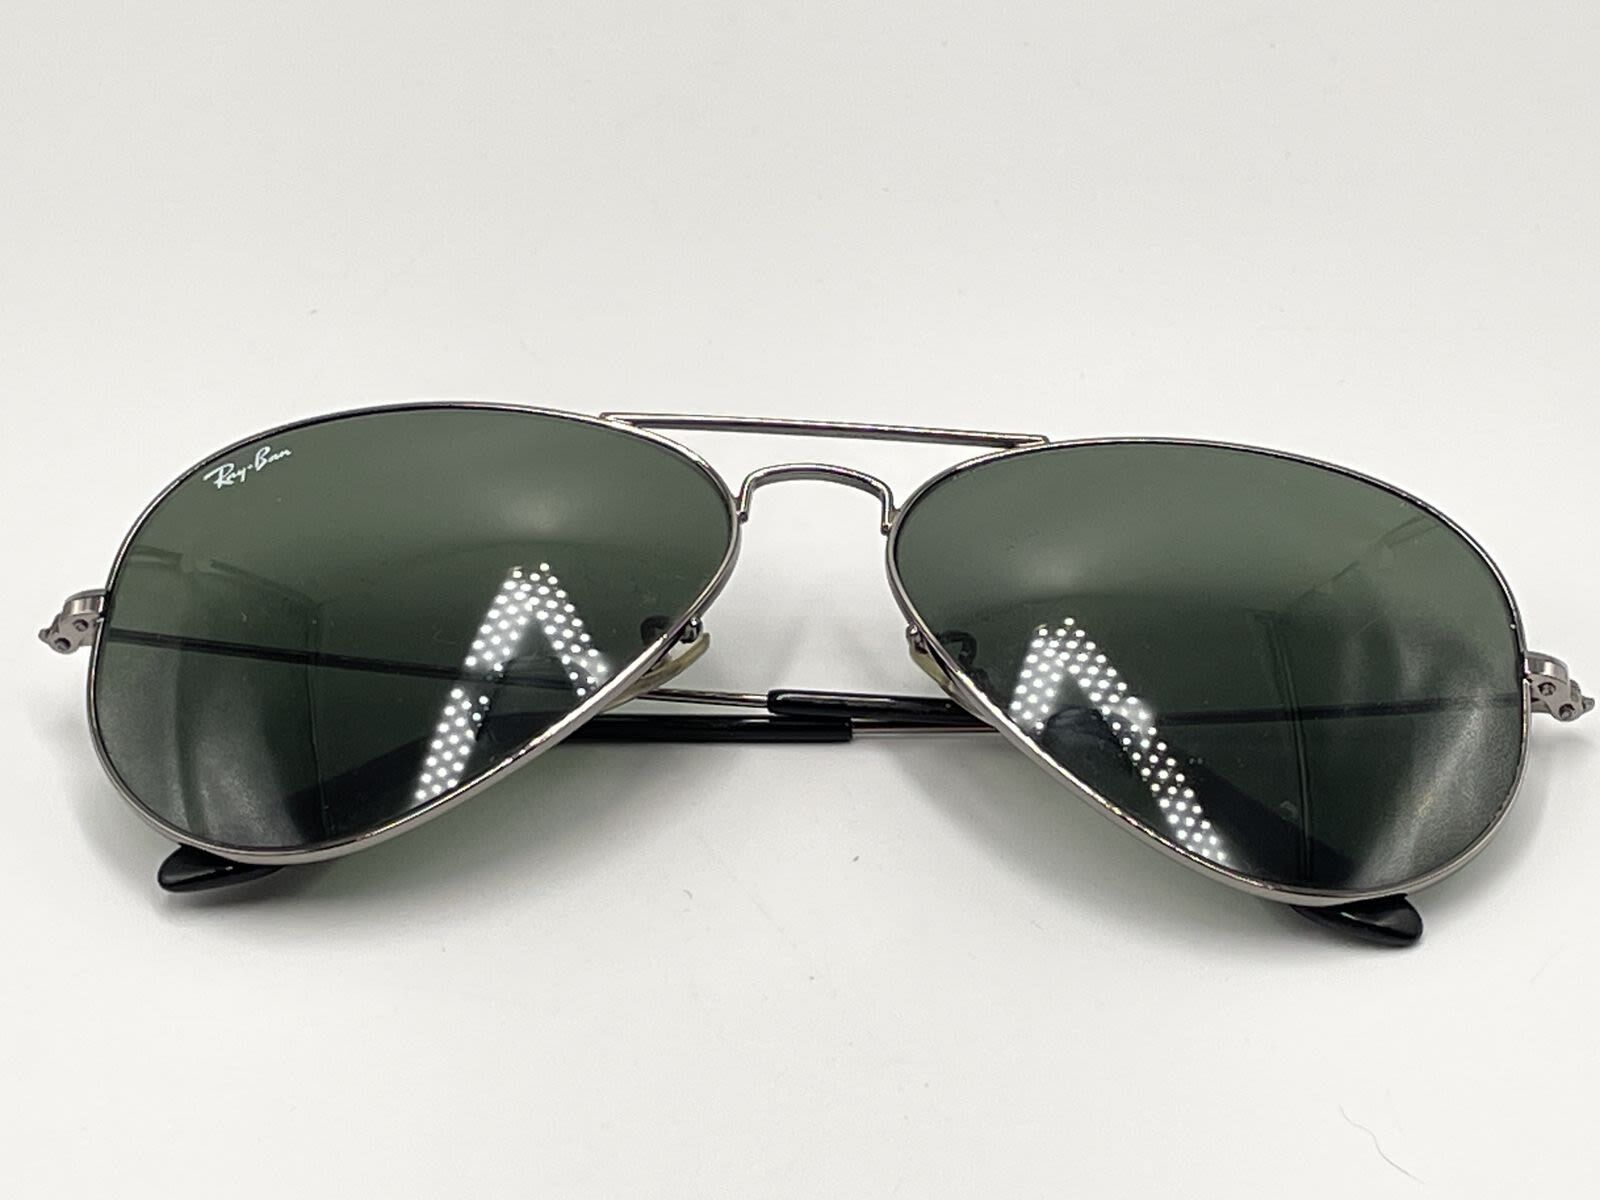 Semi-round Sunglasses in Honey with Green Lenses | Round sunglasses,  Sunglasses, Green sunglasses